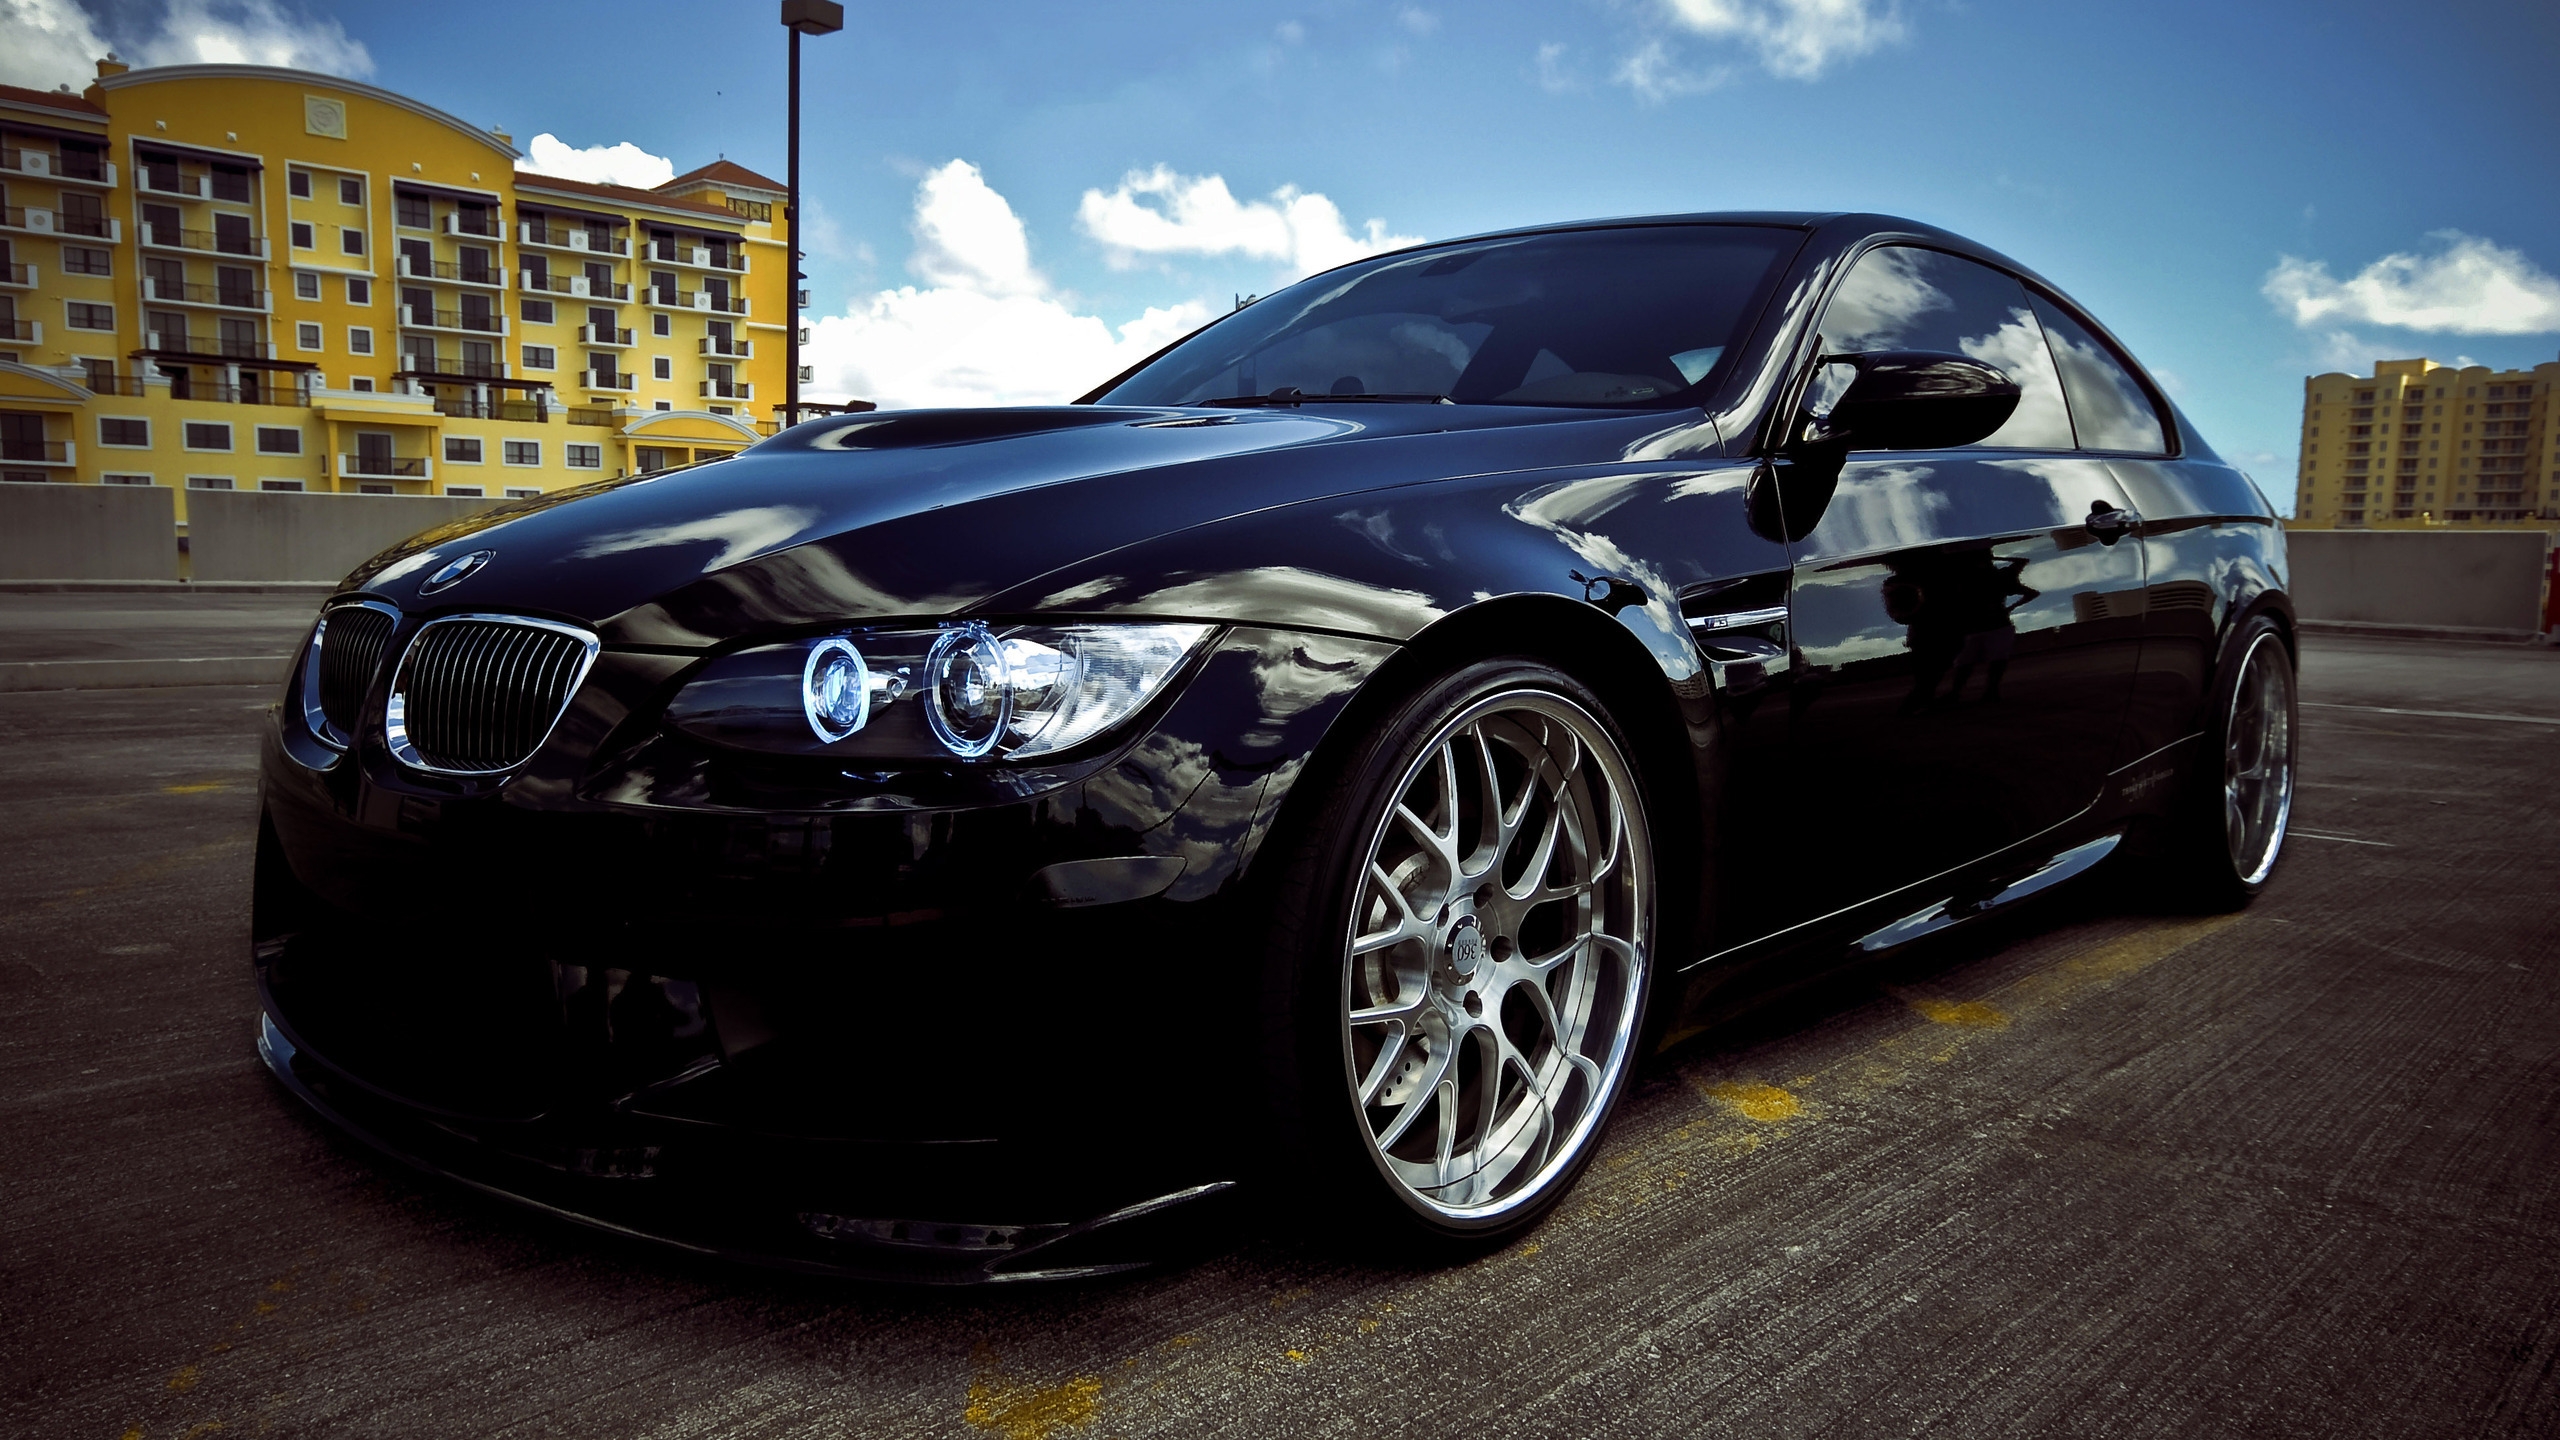 BMW M3 2010 Black for 2560x1440 HDTV resolution